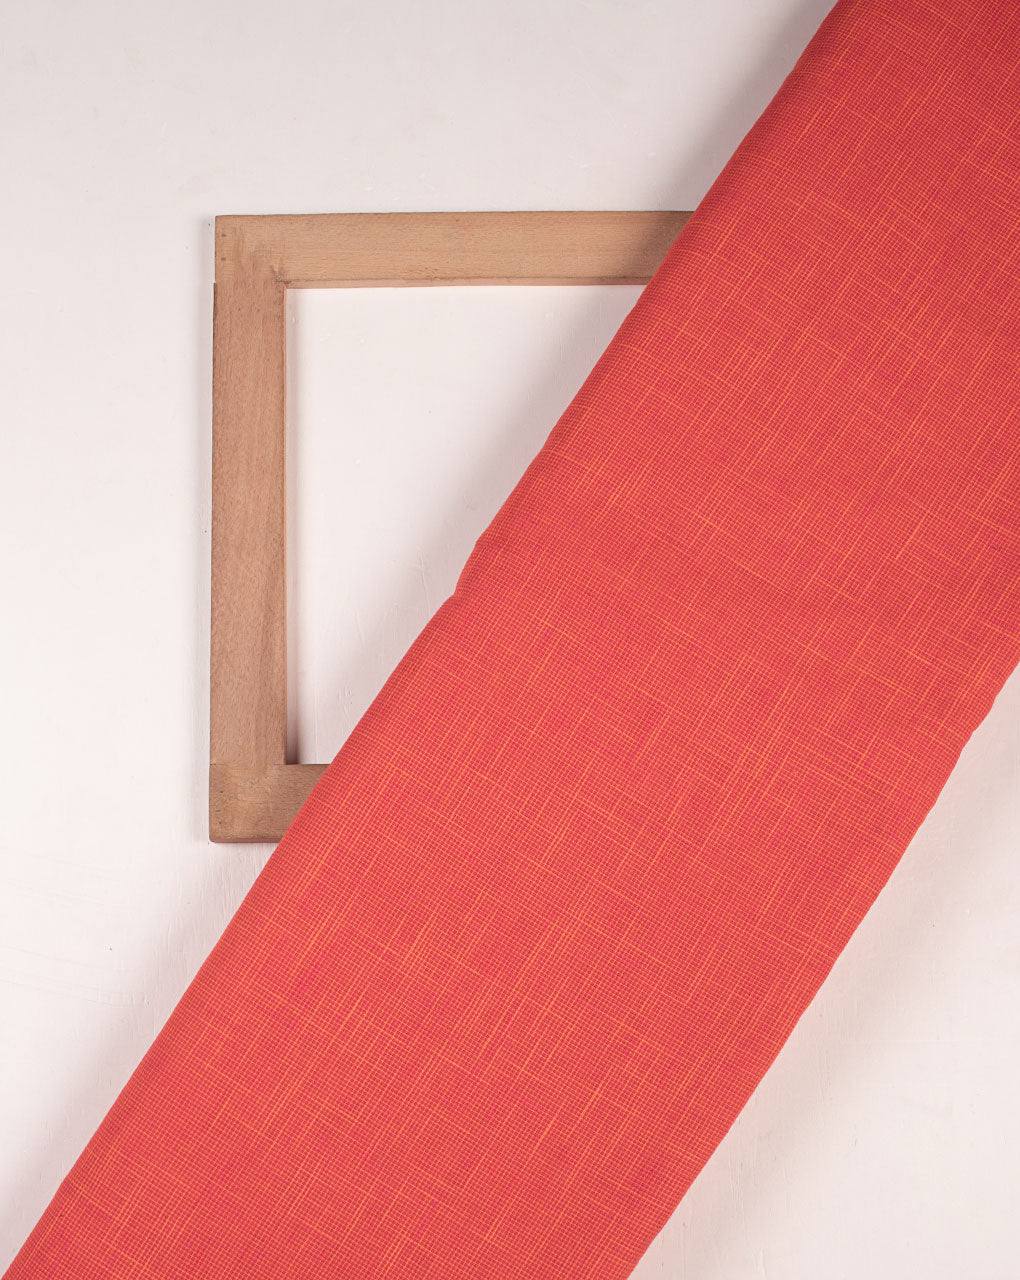 Loom Textured Cotton Fabric - Fabriclore.com